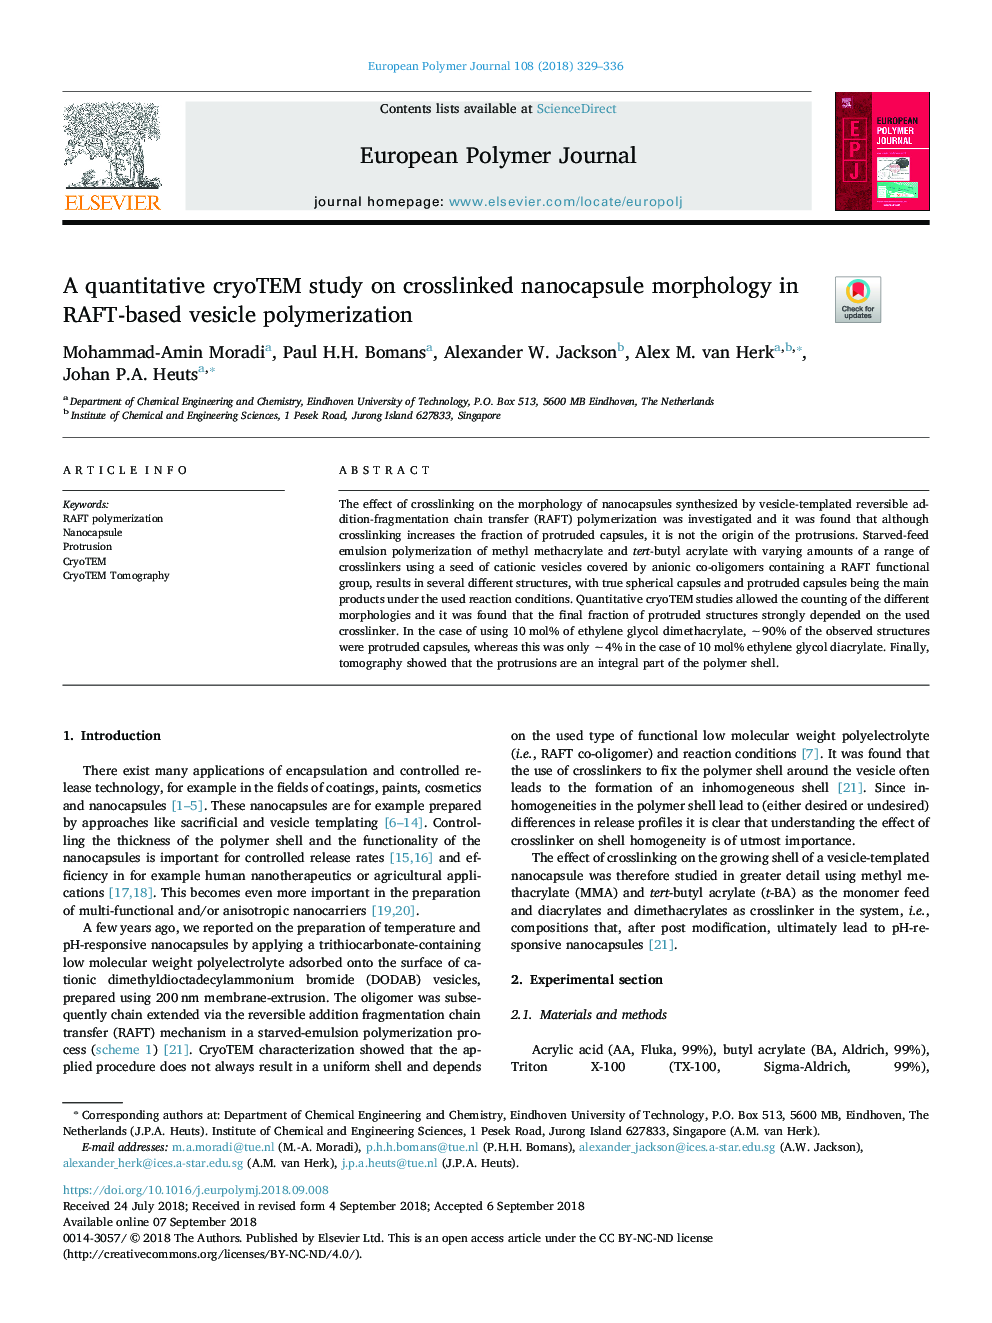 A quantitative cryoTEM study on crosslinked nanocapsule morphology in RAFT-based vesicle polymerization